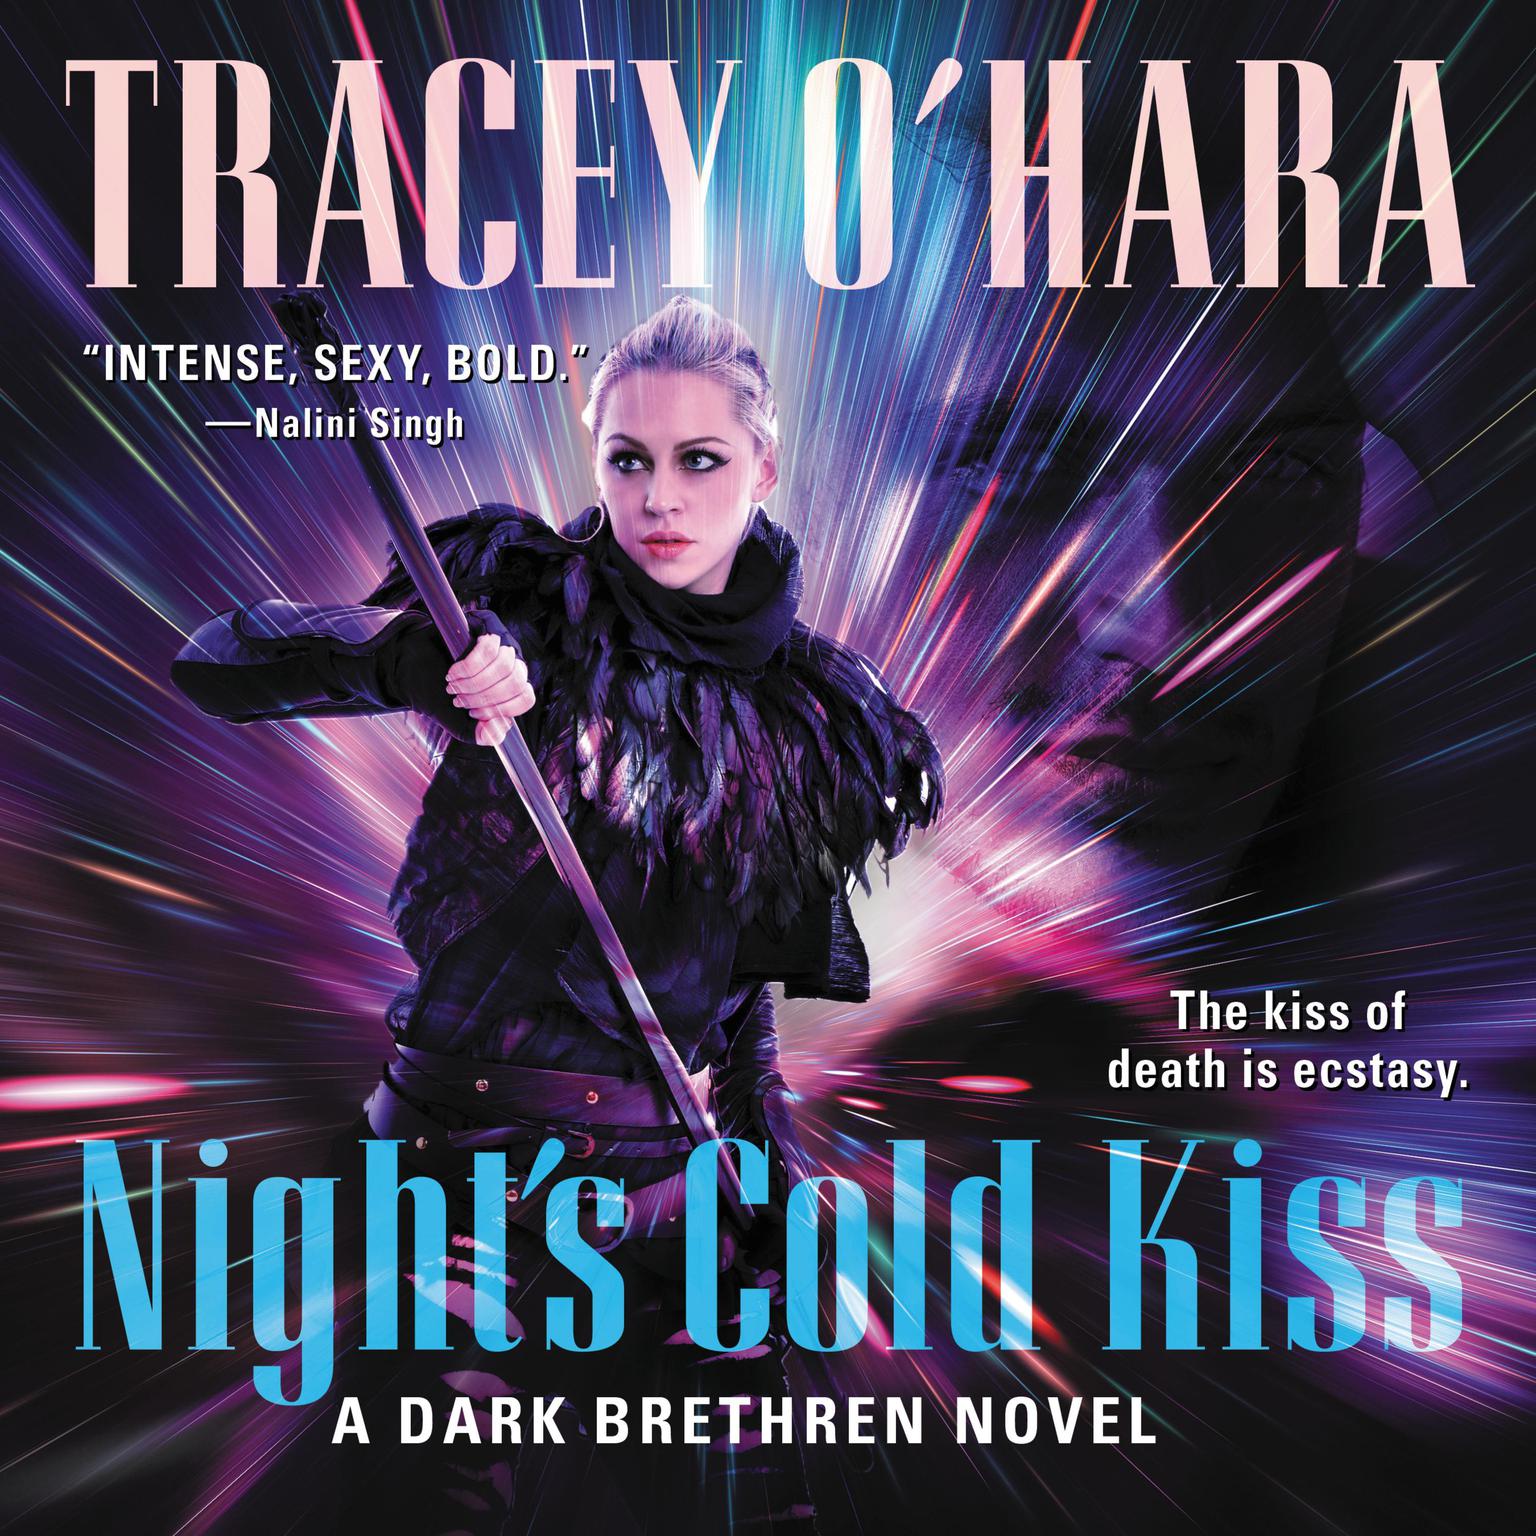 Nights Cold Kiss: A Dark Brethren Novel Audiobook, by Tracey O'Hara